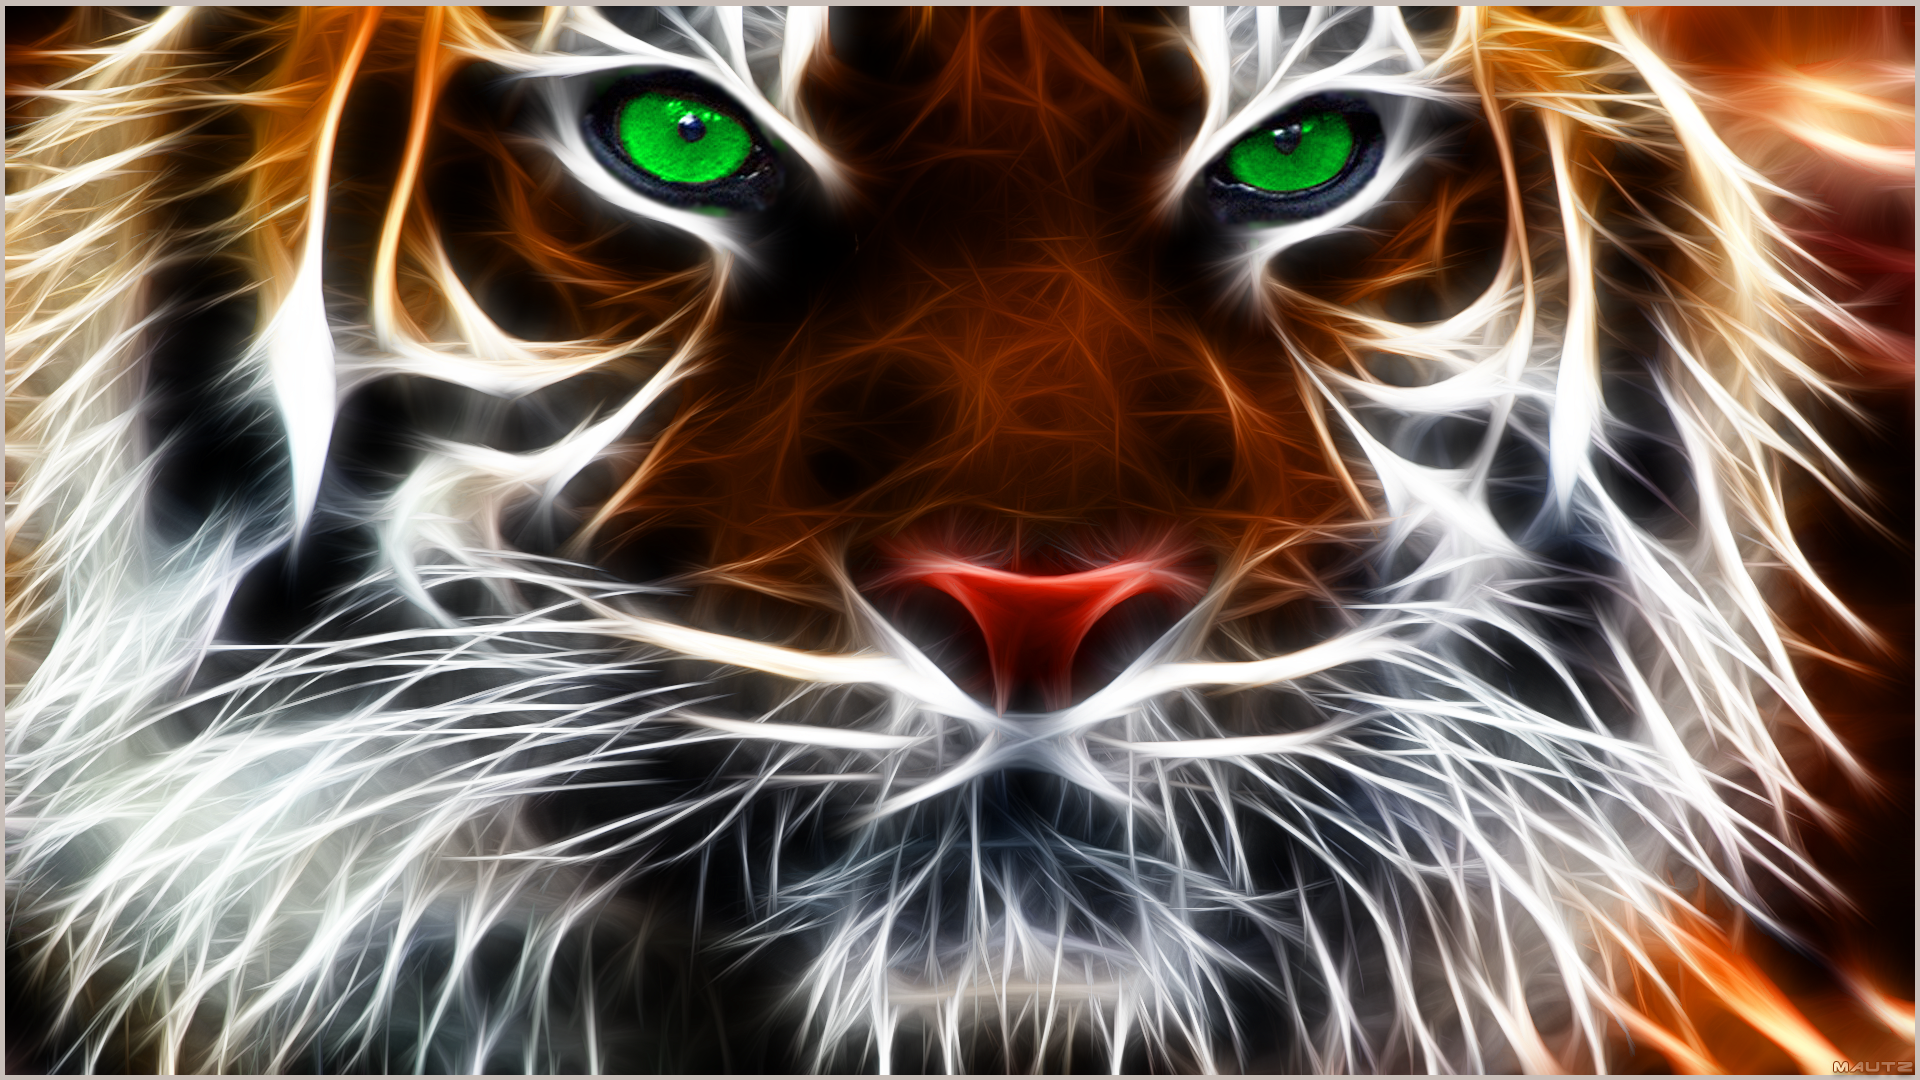 General 1920x1080 tiger animals Fractalius mammals big cats animal eyes green eyes